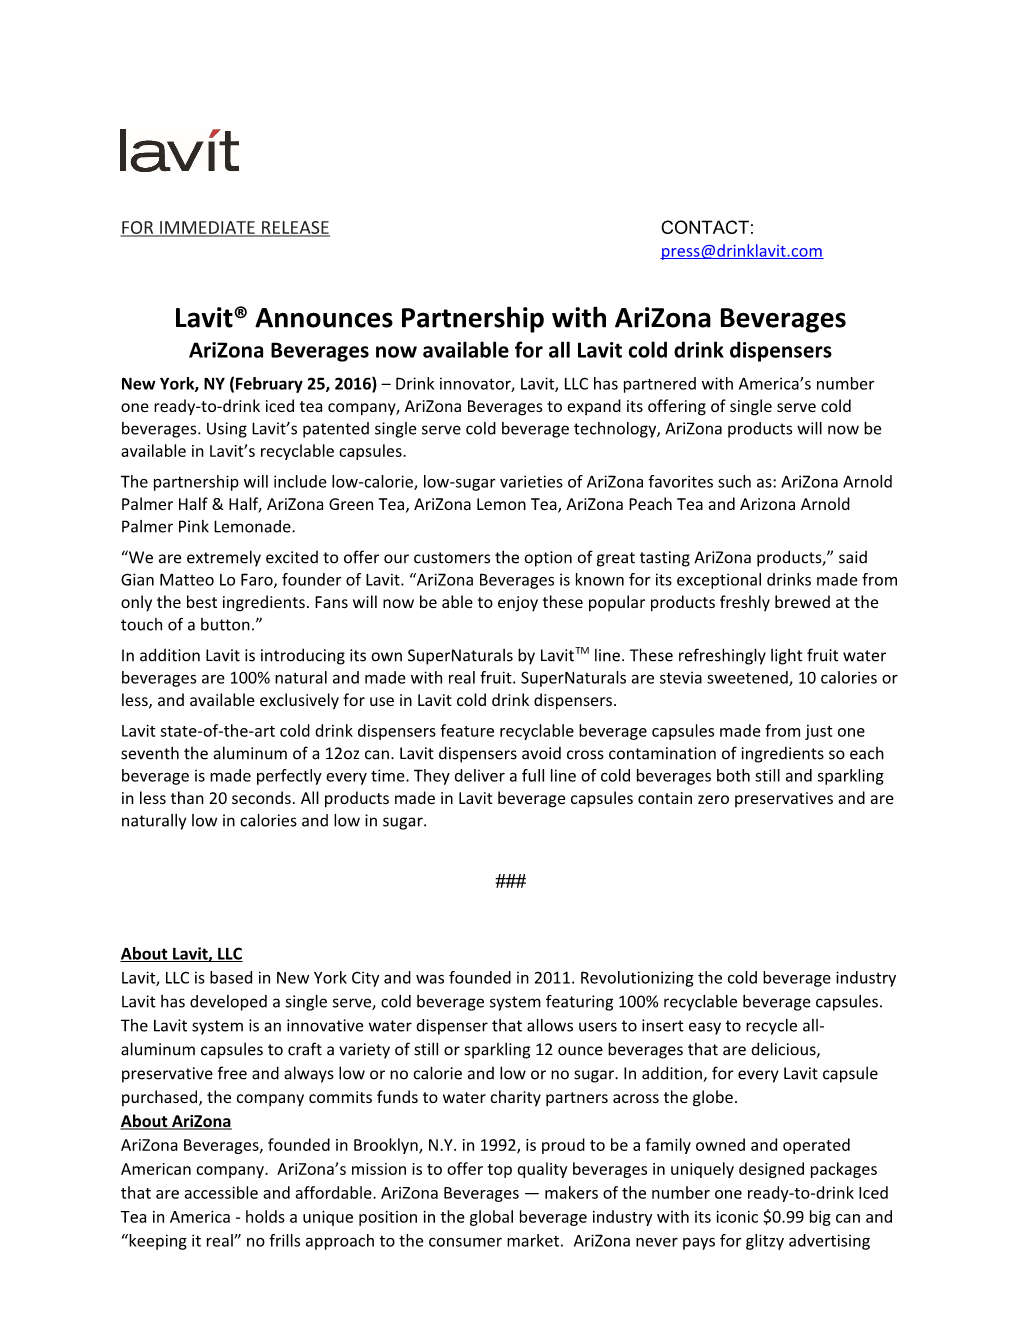 Lavit Announces Partnership with Arizonabeverages